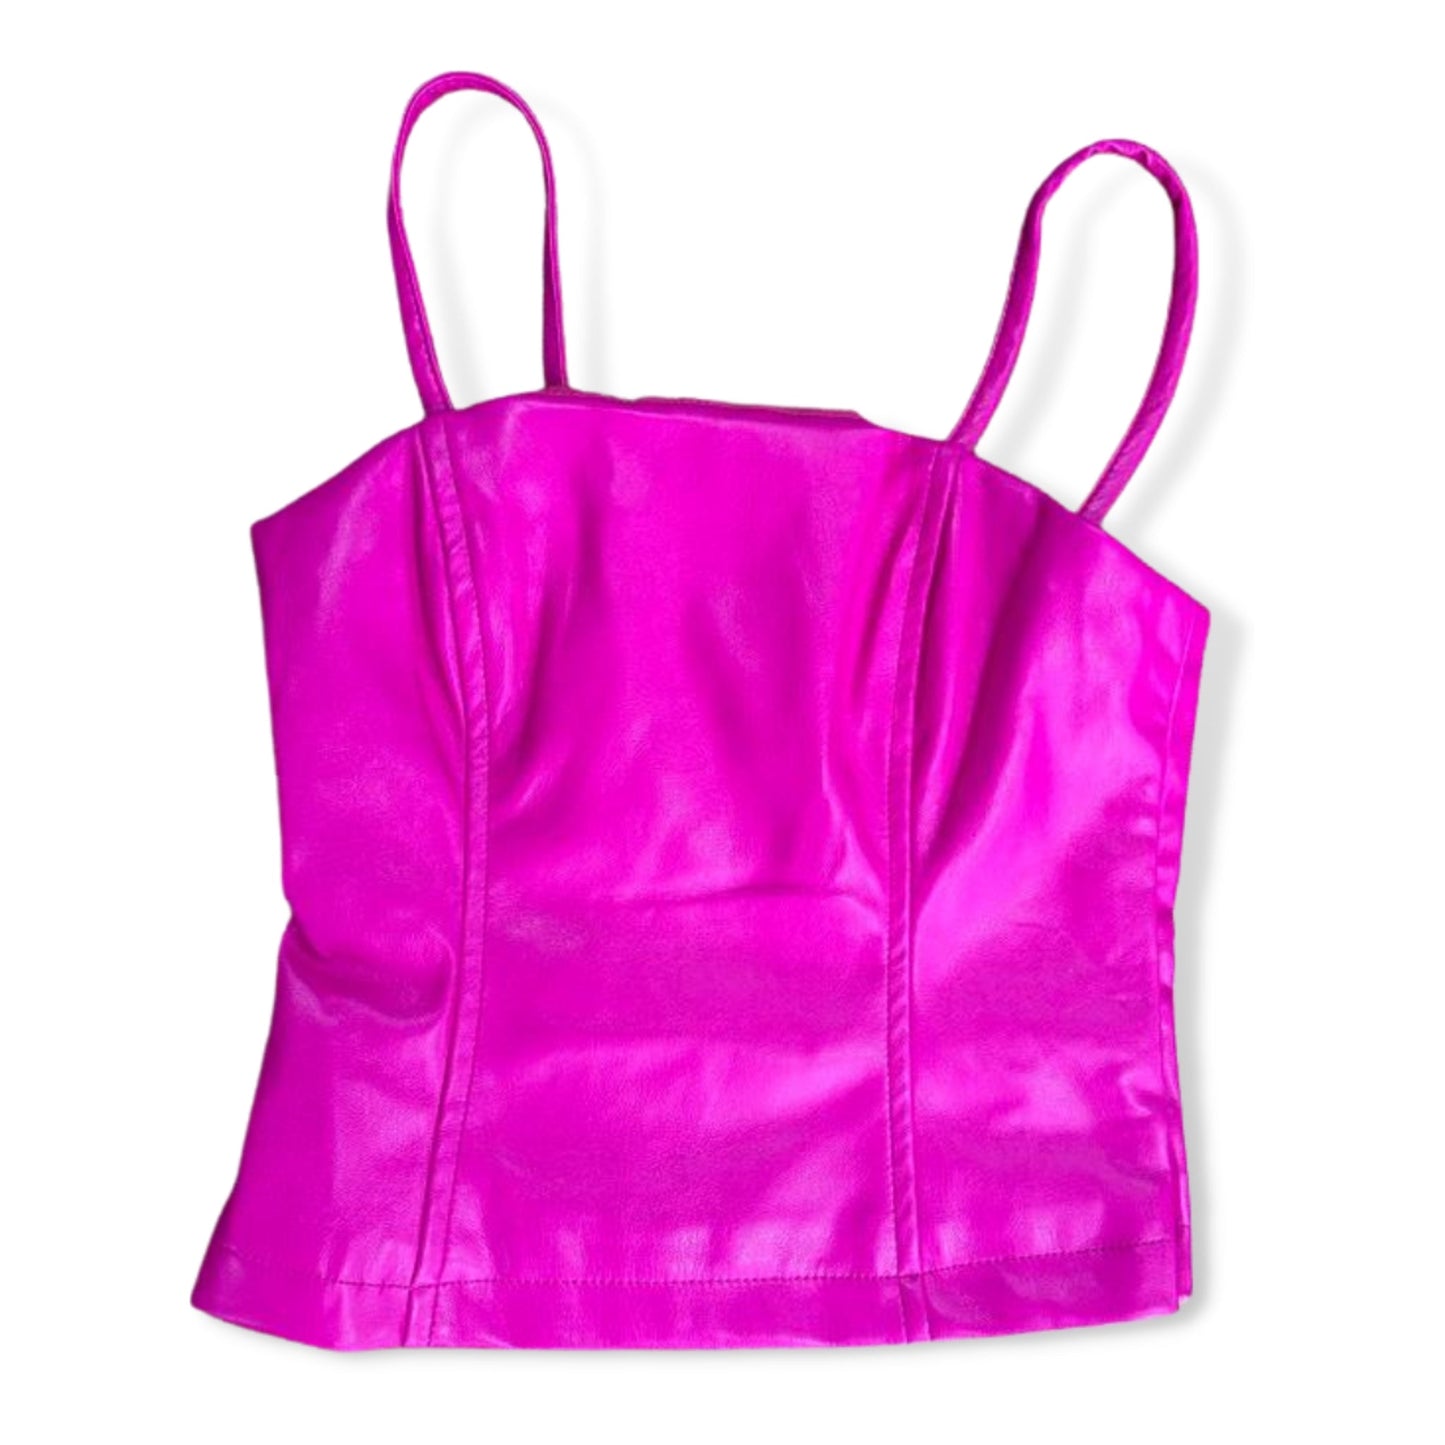 KatieJNYC Shocking Pink Vegan Leather Lexi Bustier - a Spirit Animal - Tops $60-$90 active August 2023 KatieJNYC